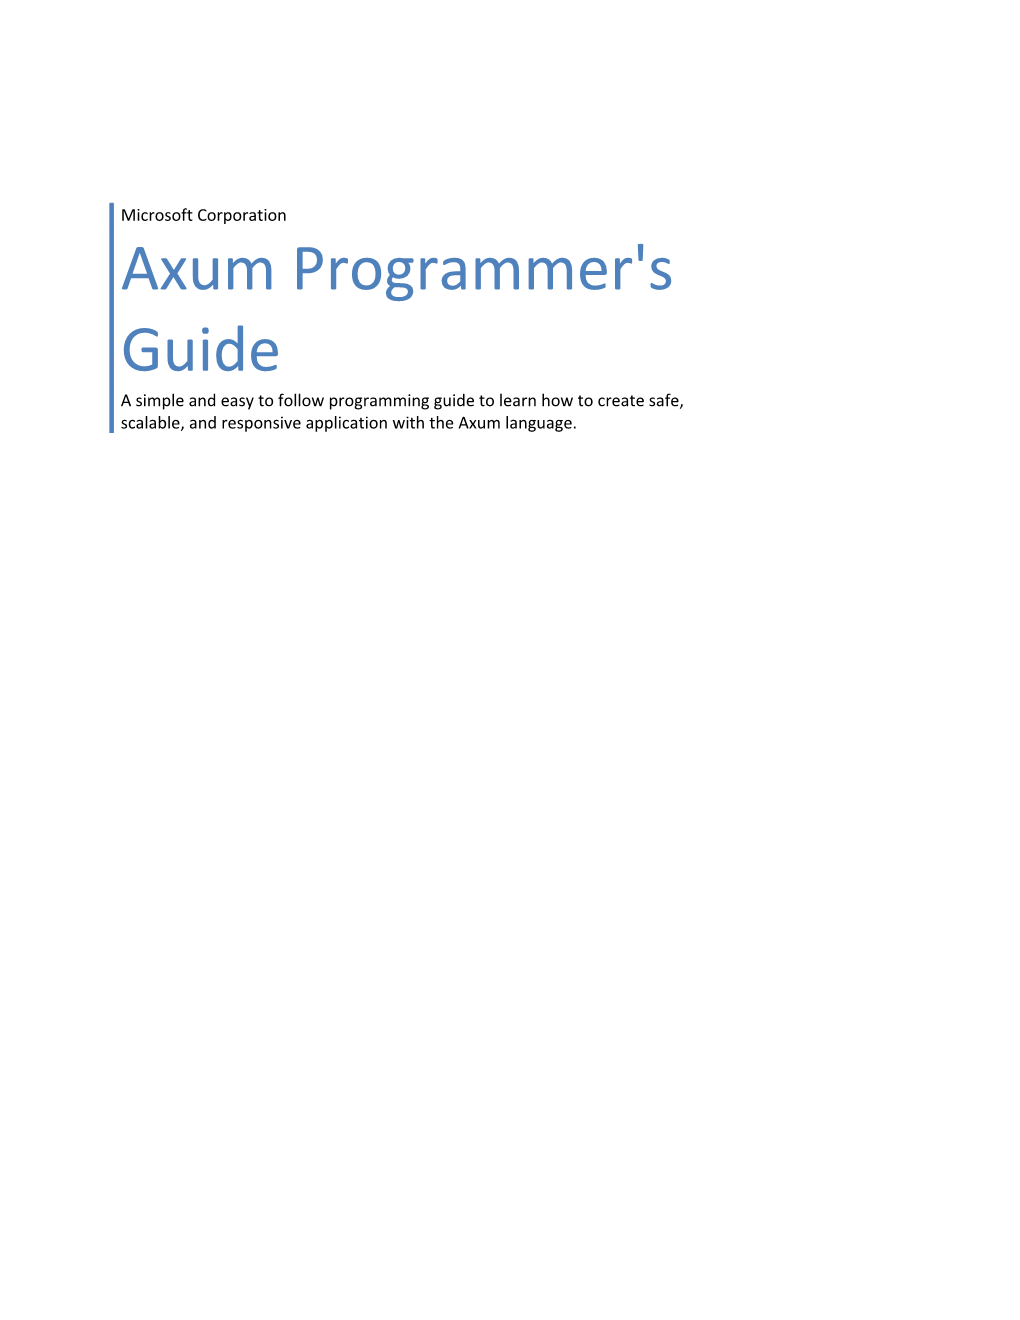 Axum Programmer's Guide